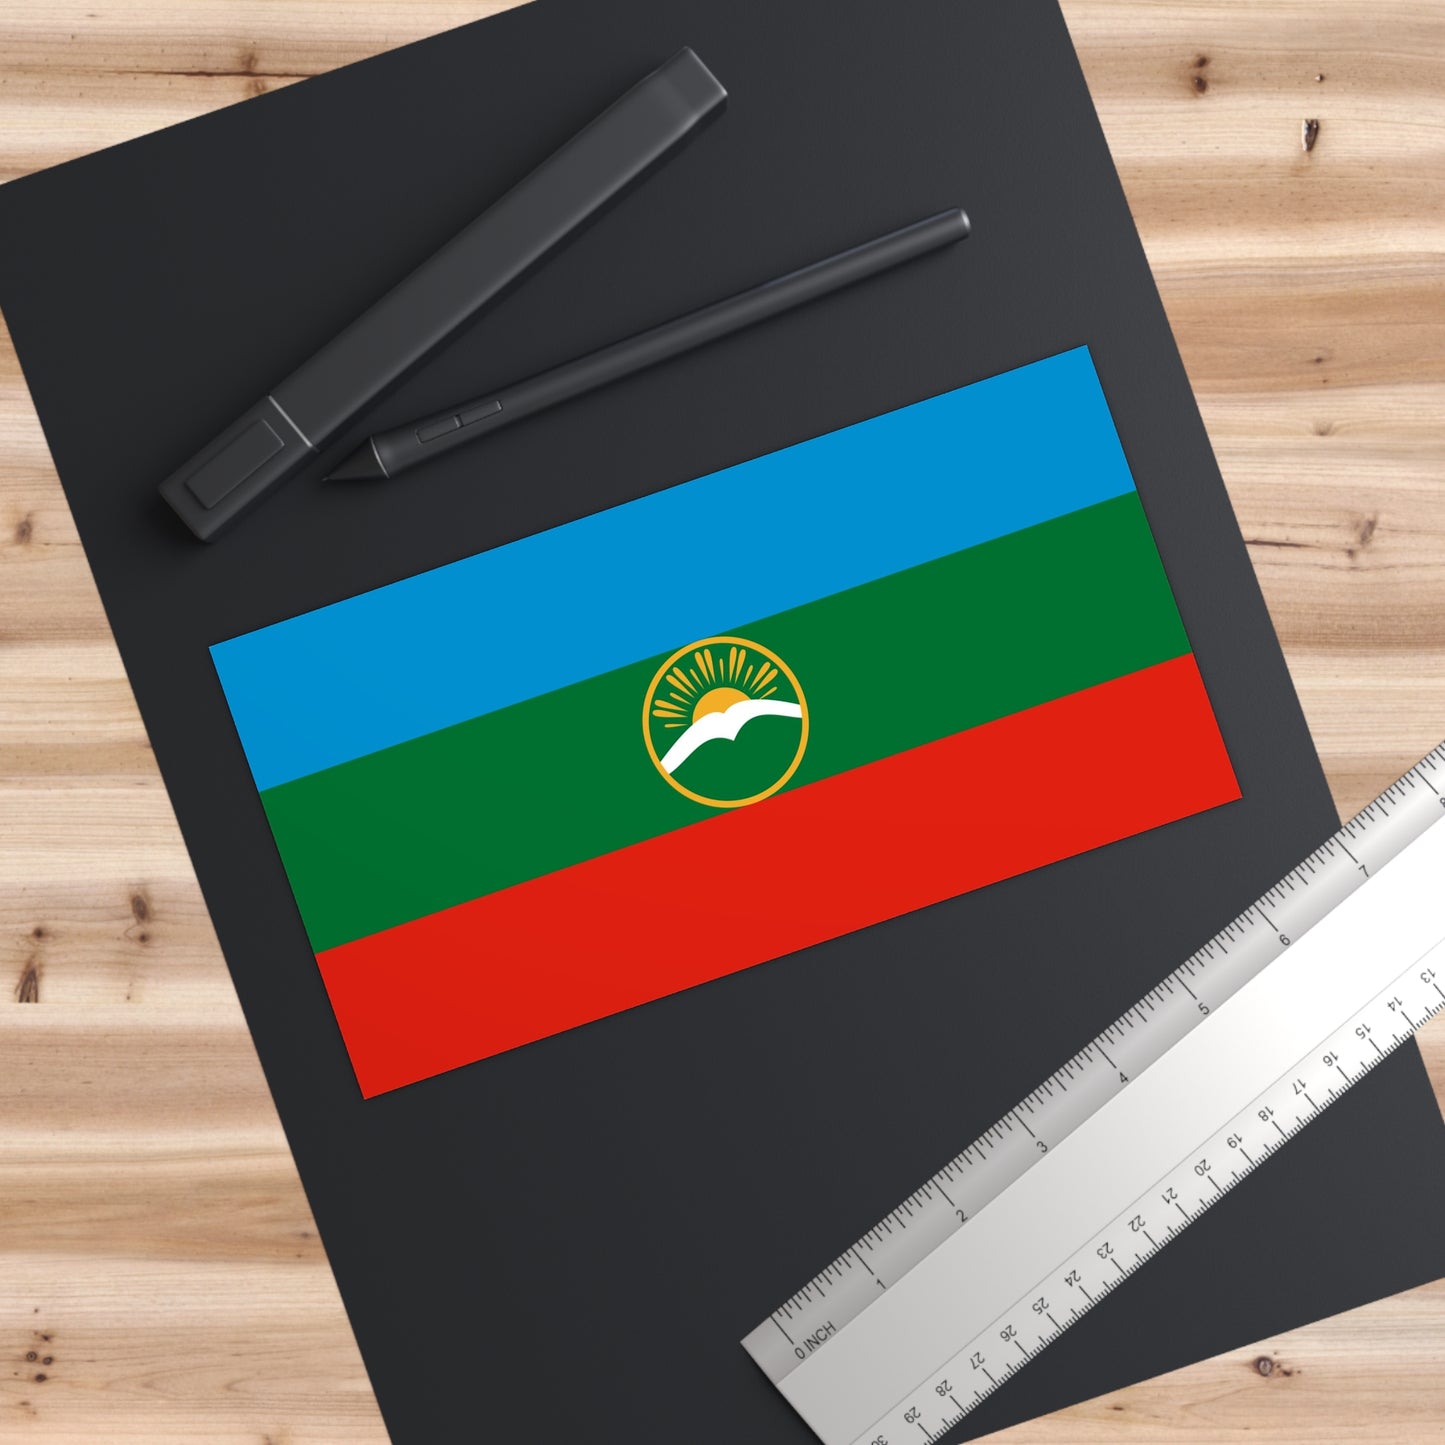 Karachay Cherkess Flag Bumper Sticker